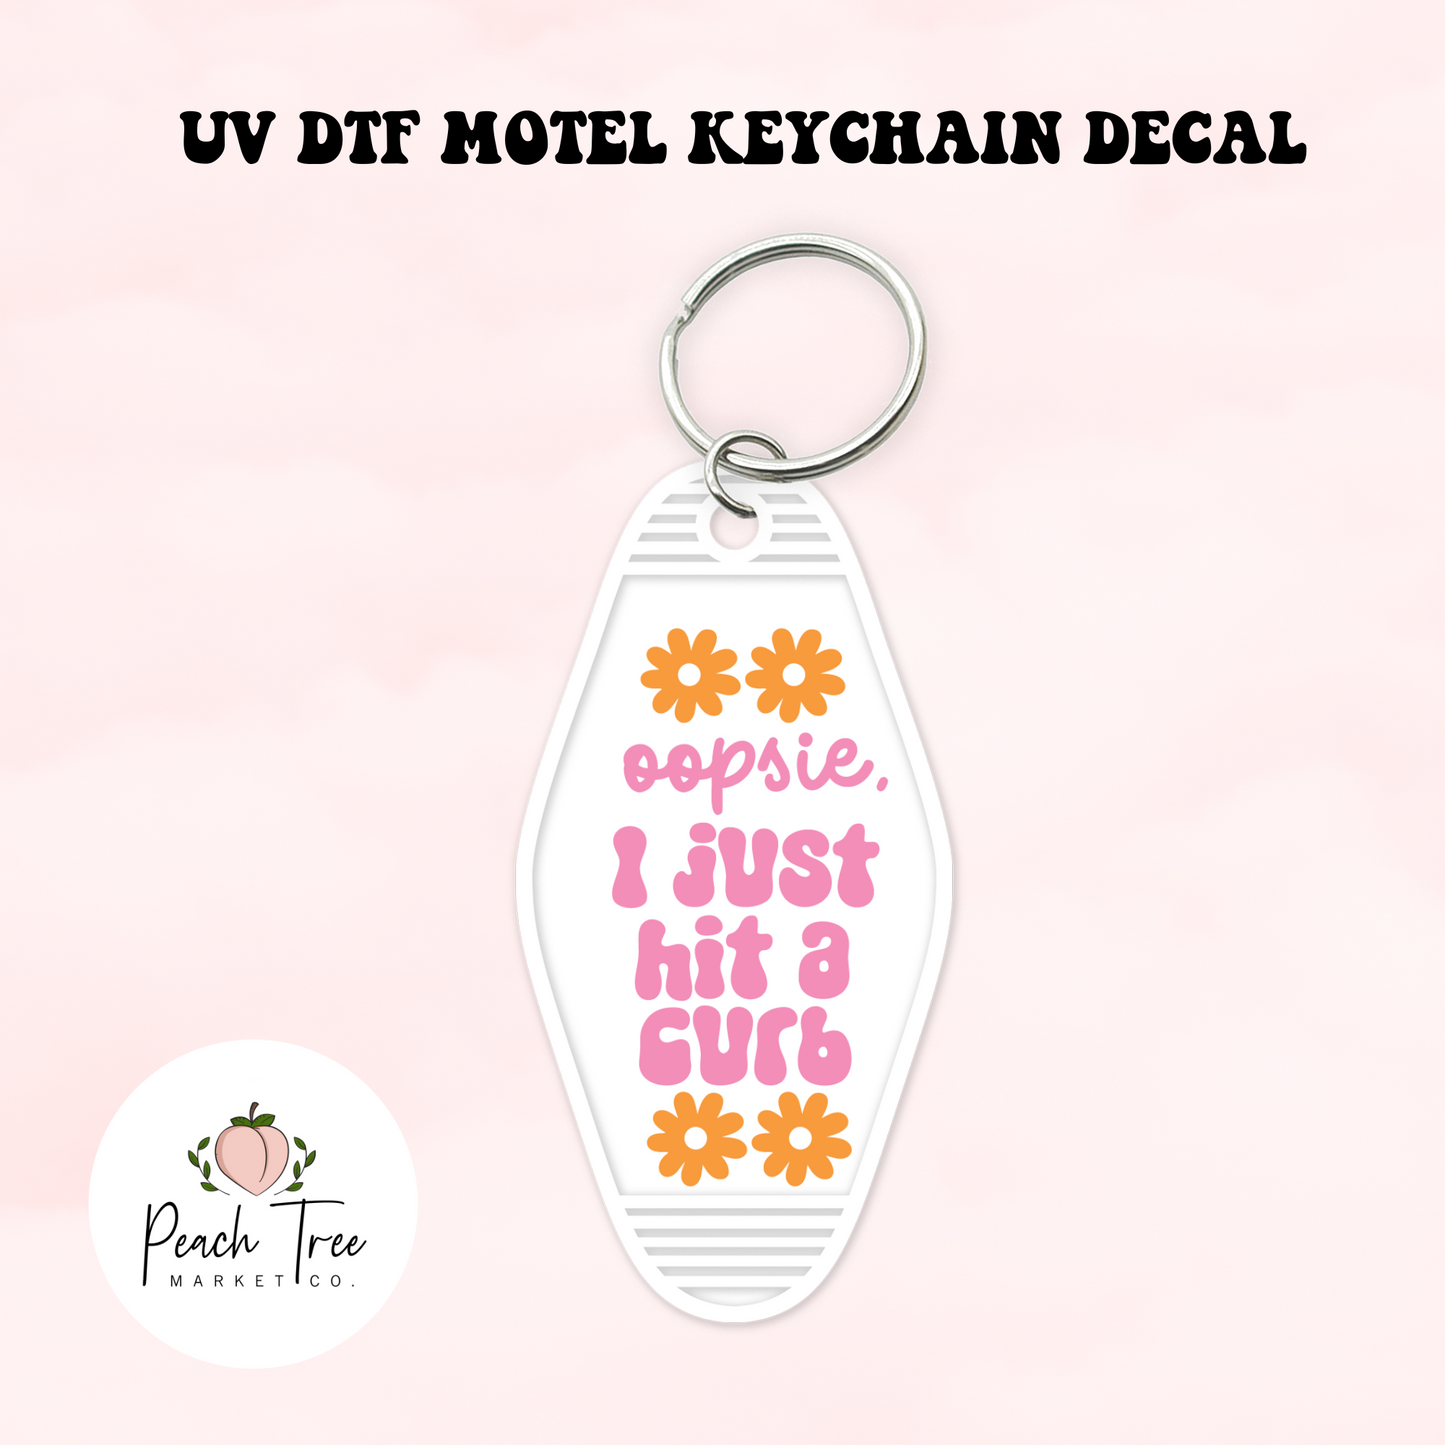 Uv Dtf Keychain Transfer, Uv Dtf Decals for Motel Keychains, Uvdtf Motel  Tag, Keychain Quotes 